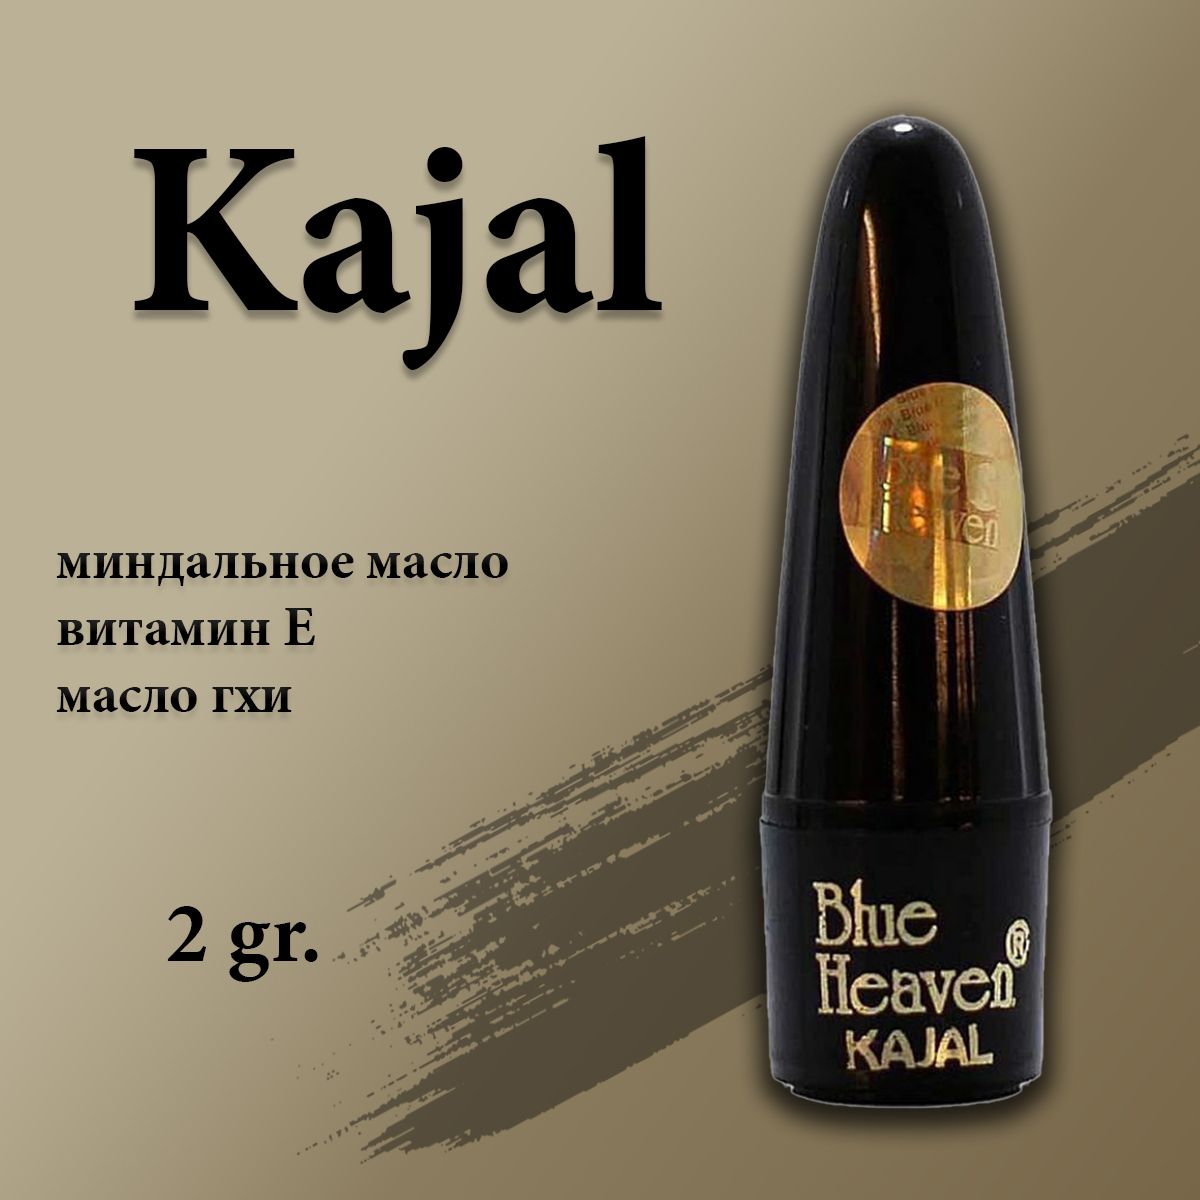 ПодводкадляглазКаджалсВитаминомЕ(KajalBlueHeaven),черная,1шт